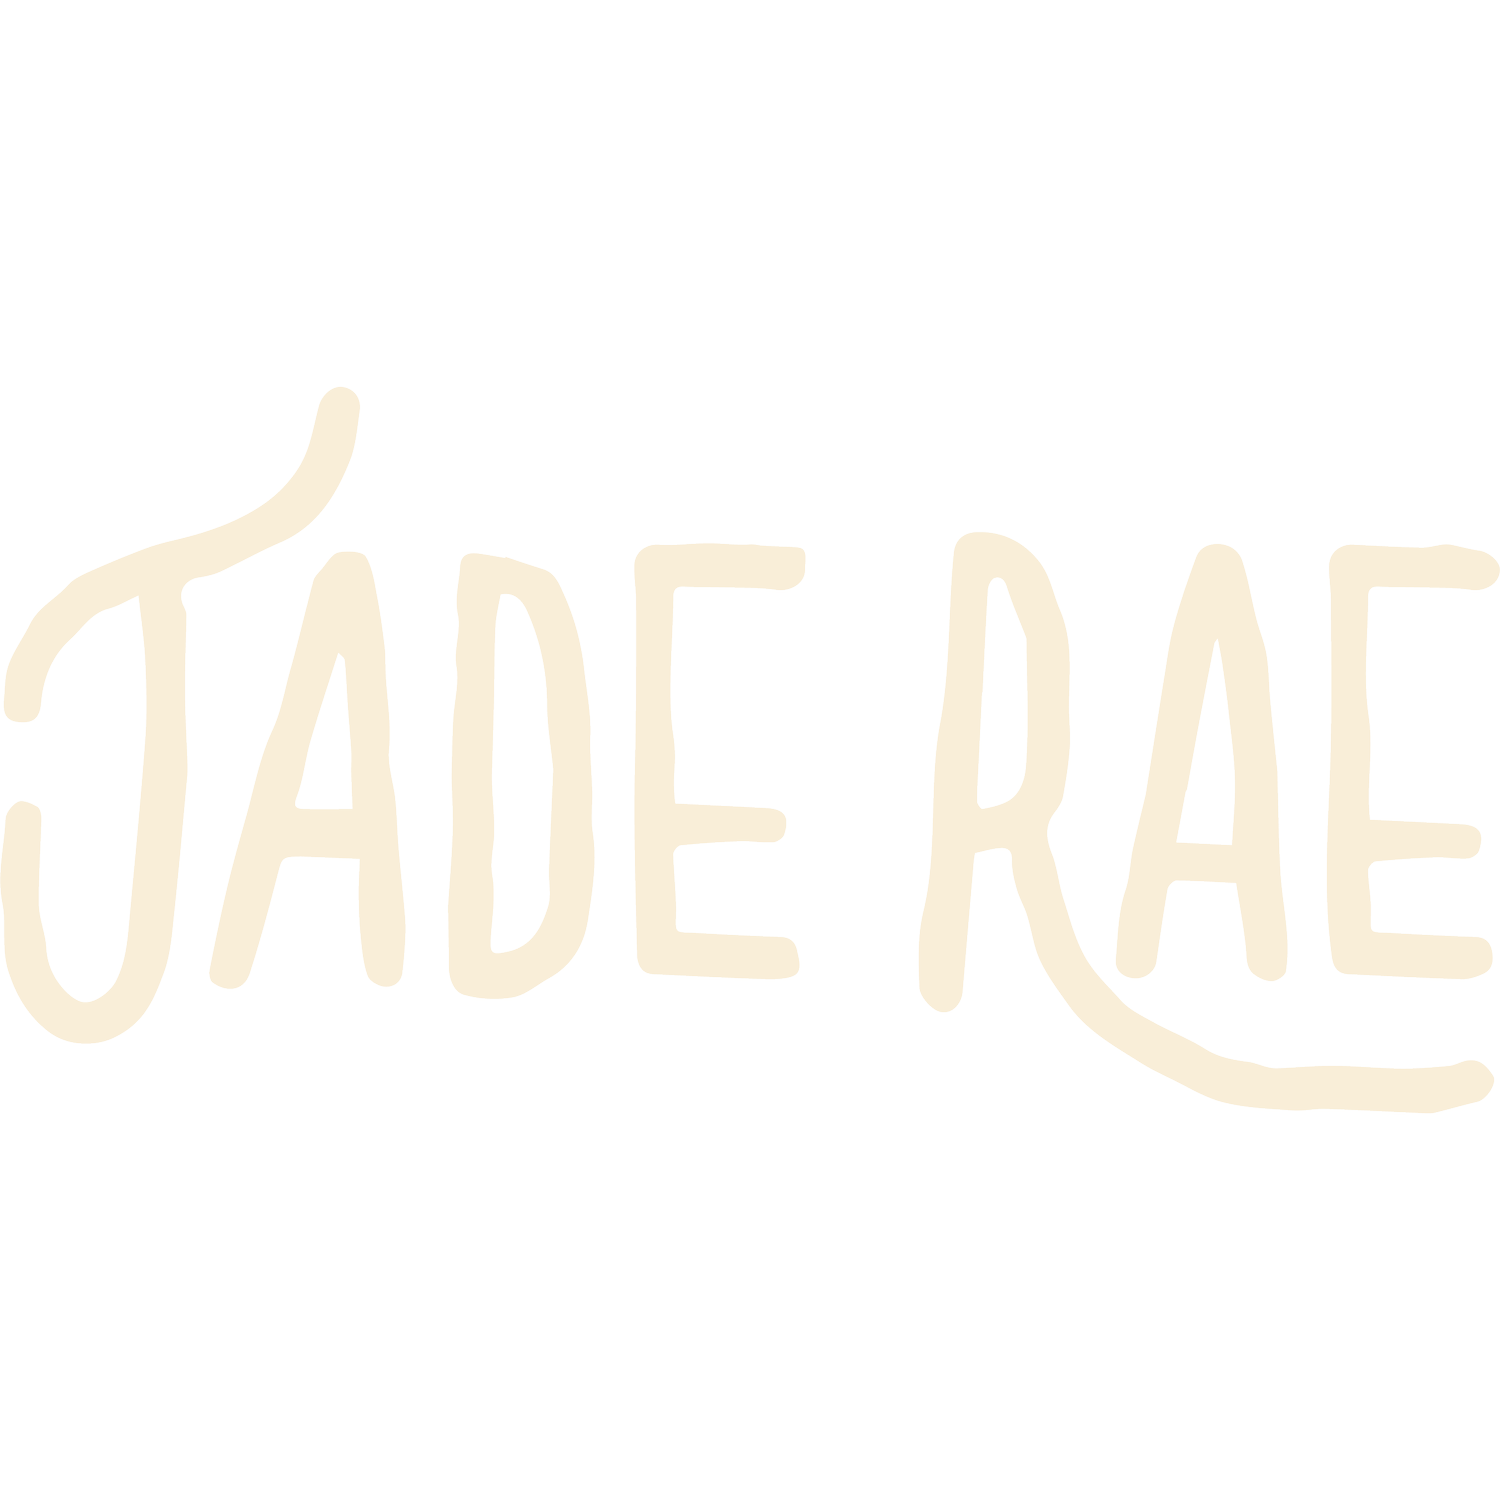 Jade Rae Photography